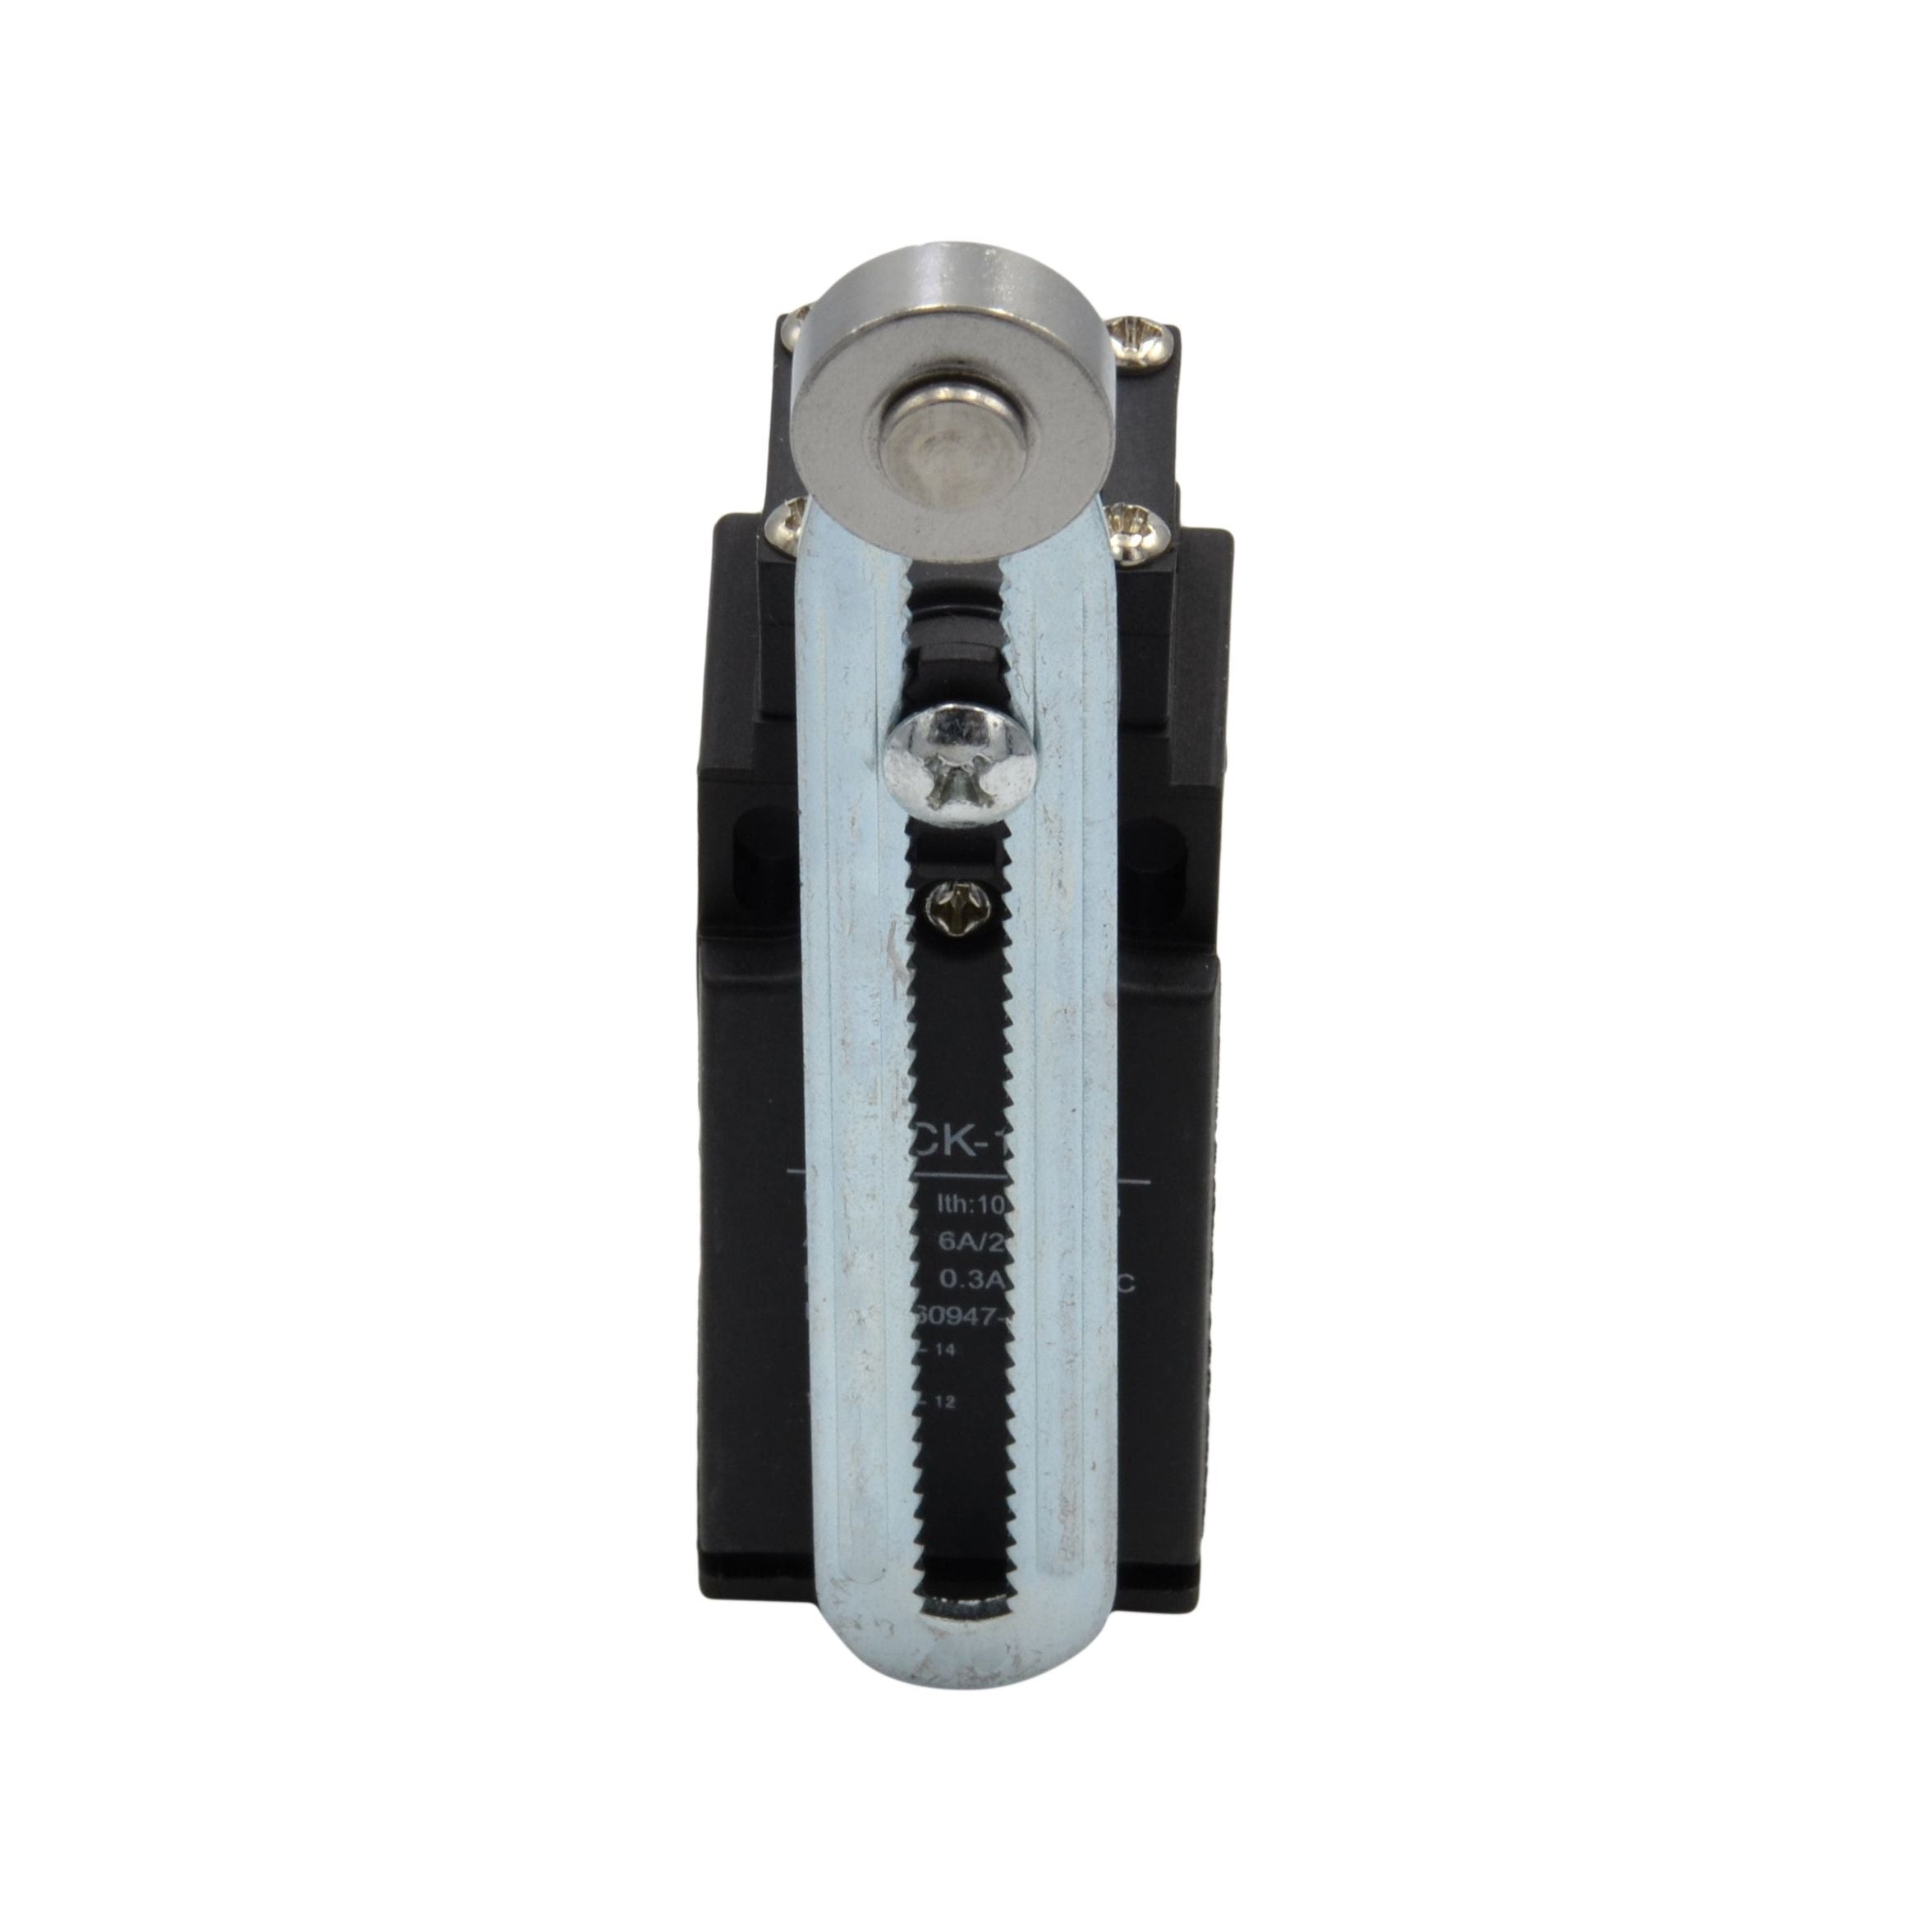 XCK-131 Adjustable Roller Lever Arm Limit Switch